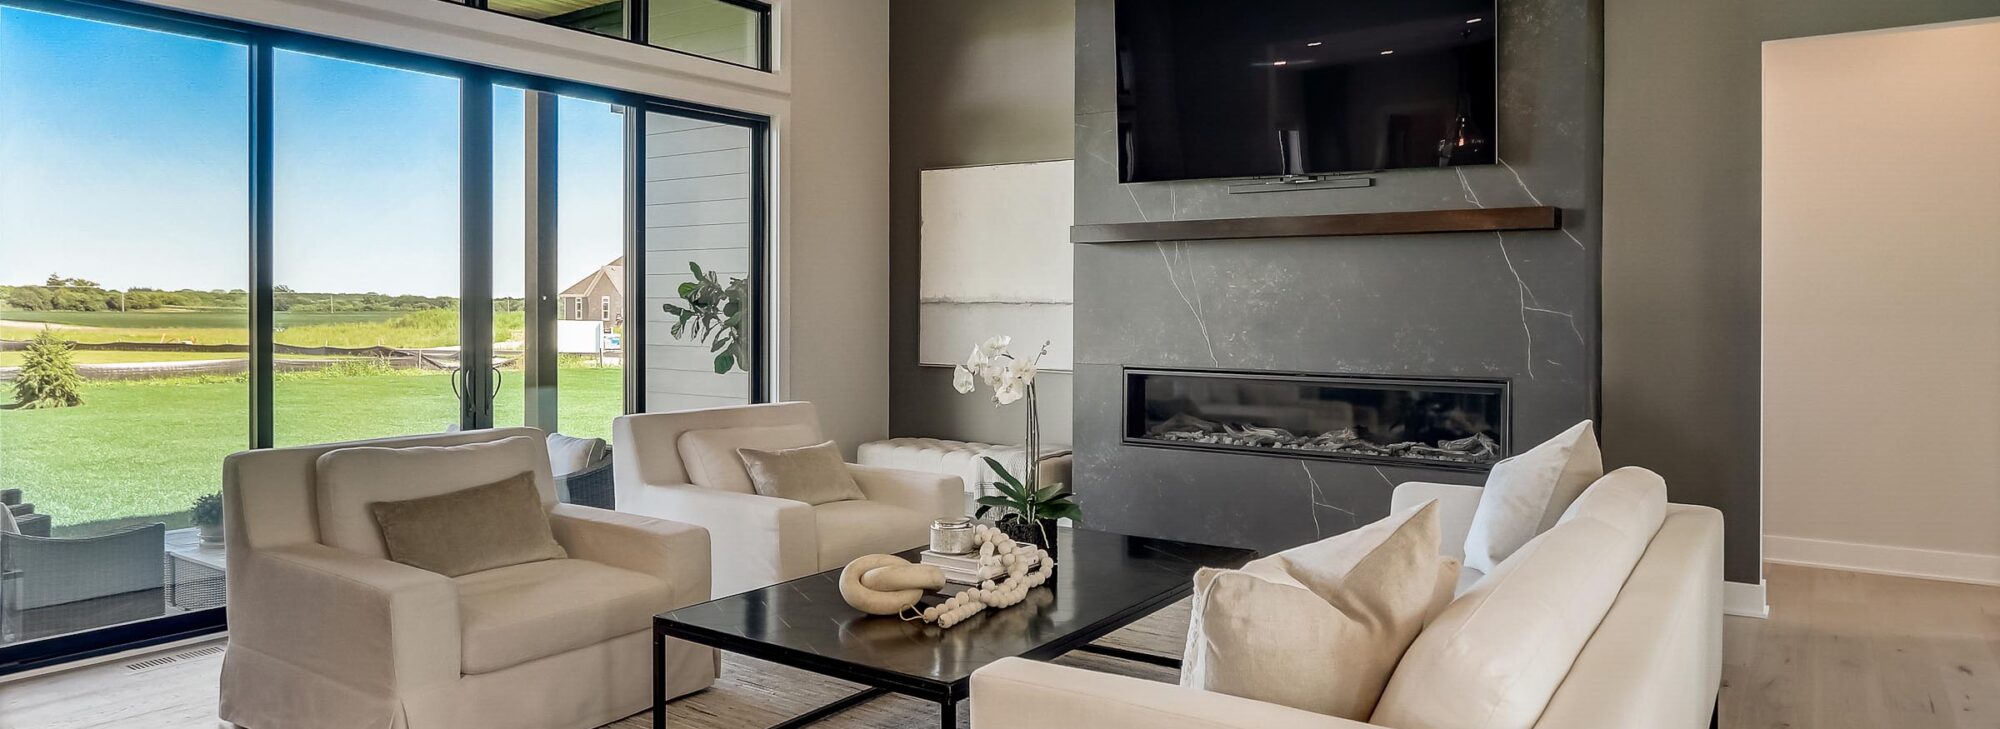 Custom interior design of a living area with fireplace